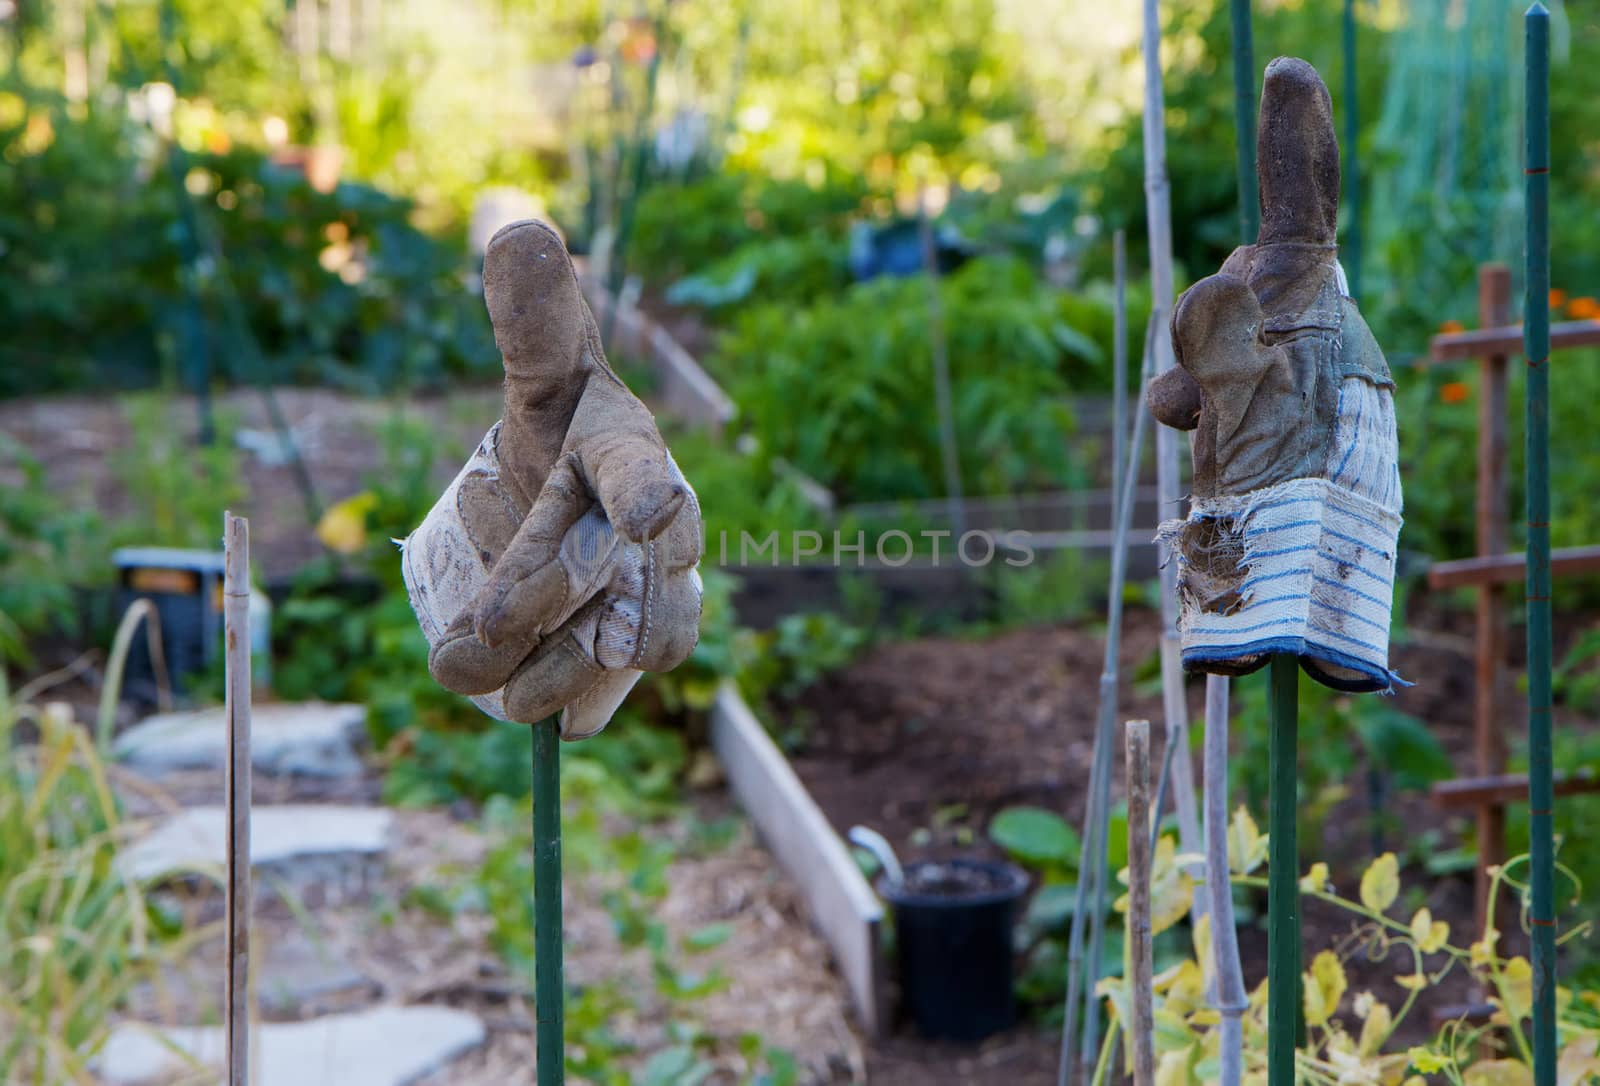 Gardening Directions by bobkeenan